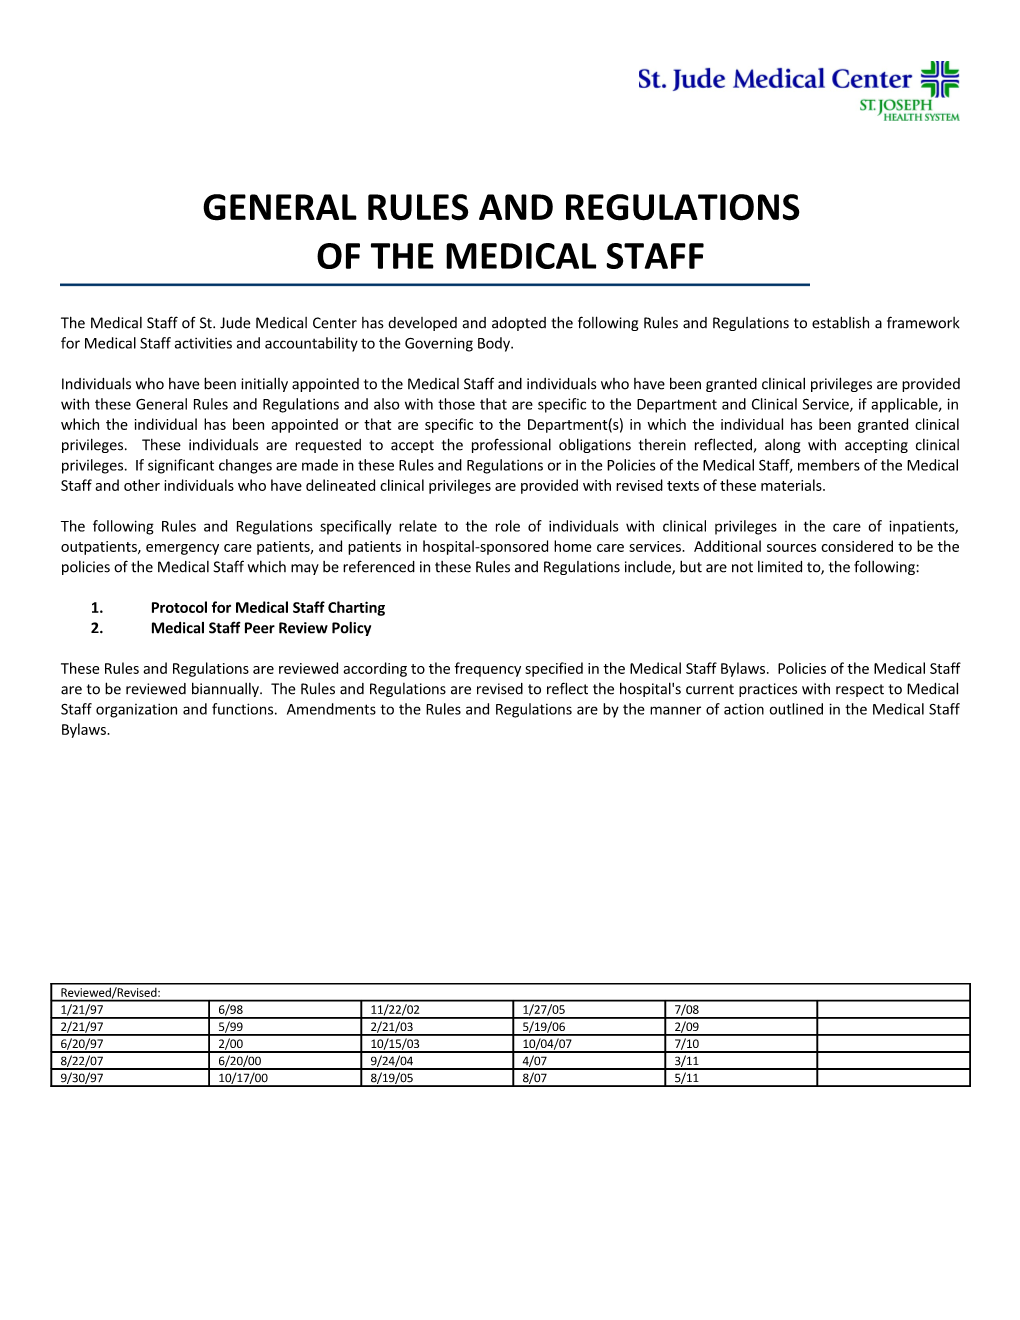 Medical Staff General Rules & Regulations